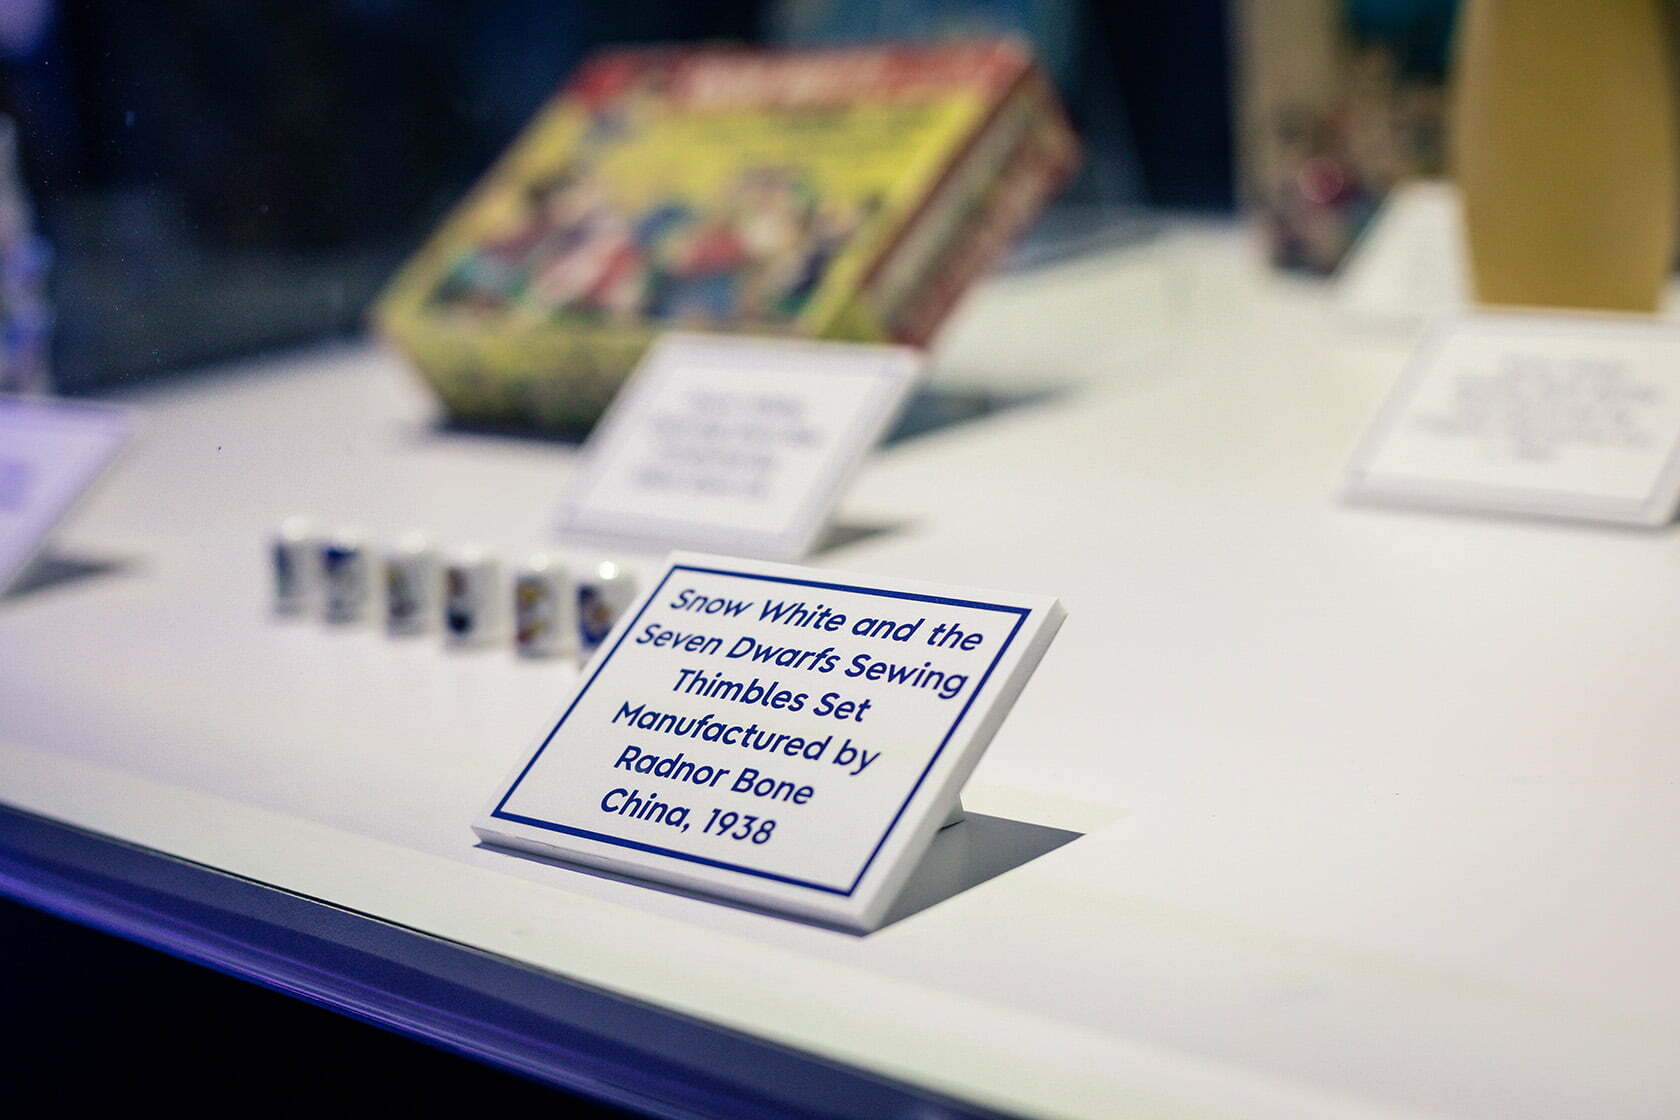 Snow White - Disney100: Disney 100 Years of Wonder exhibit at D23 Expo (Photo: Julie Nguyen/SNAP TASTE)